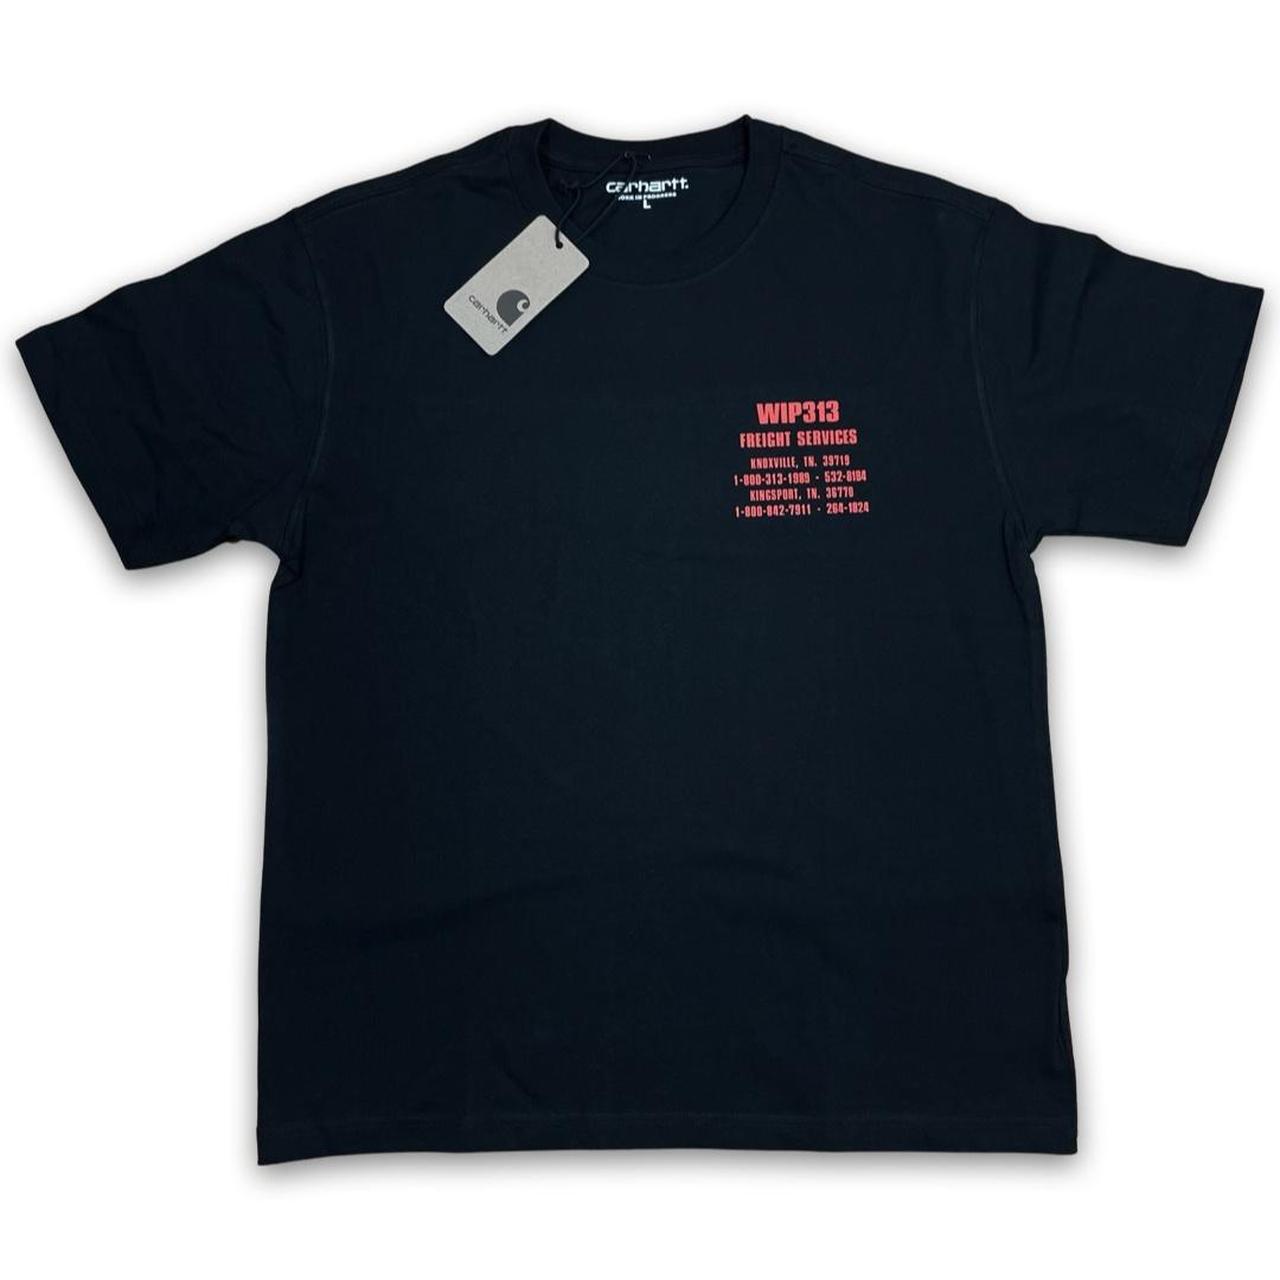 Carhartt Services Logo Black T-Shirt 🌀 Colours -... - Depop